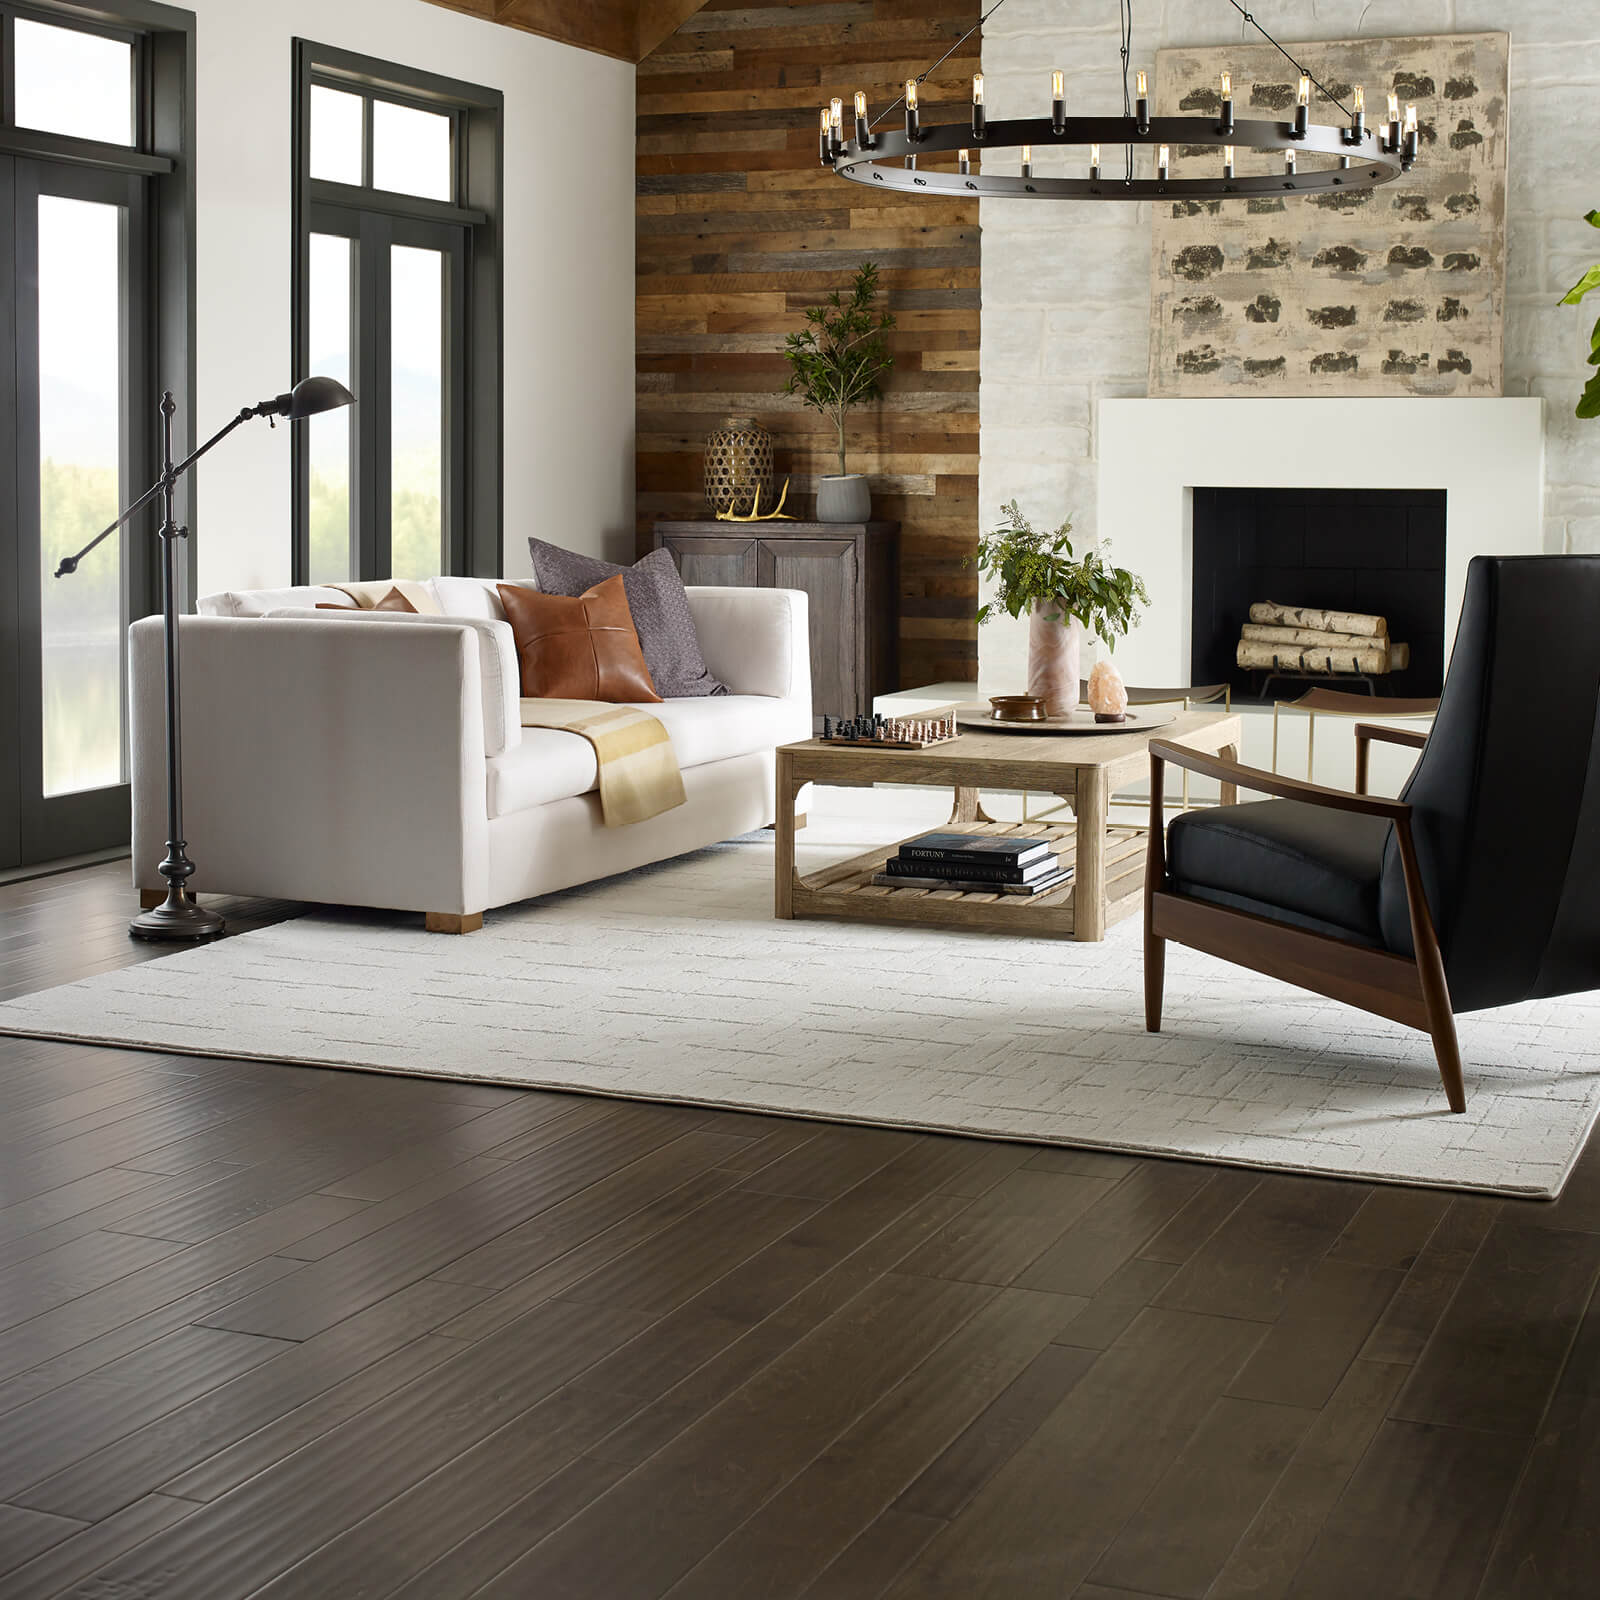 Key west hardwood flooring | AJ Rose Carpets